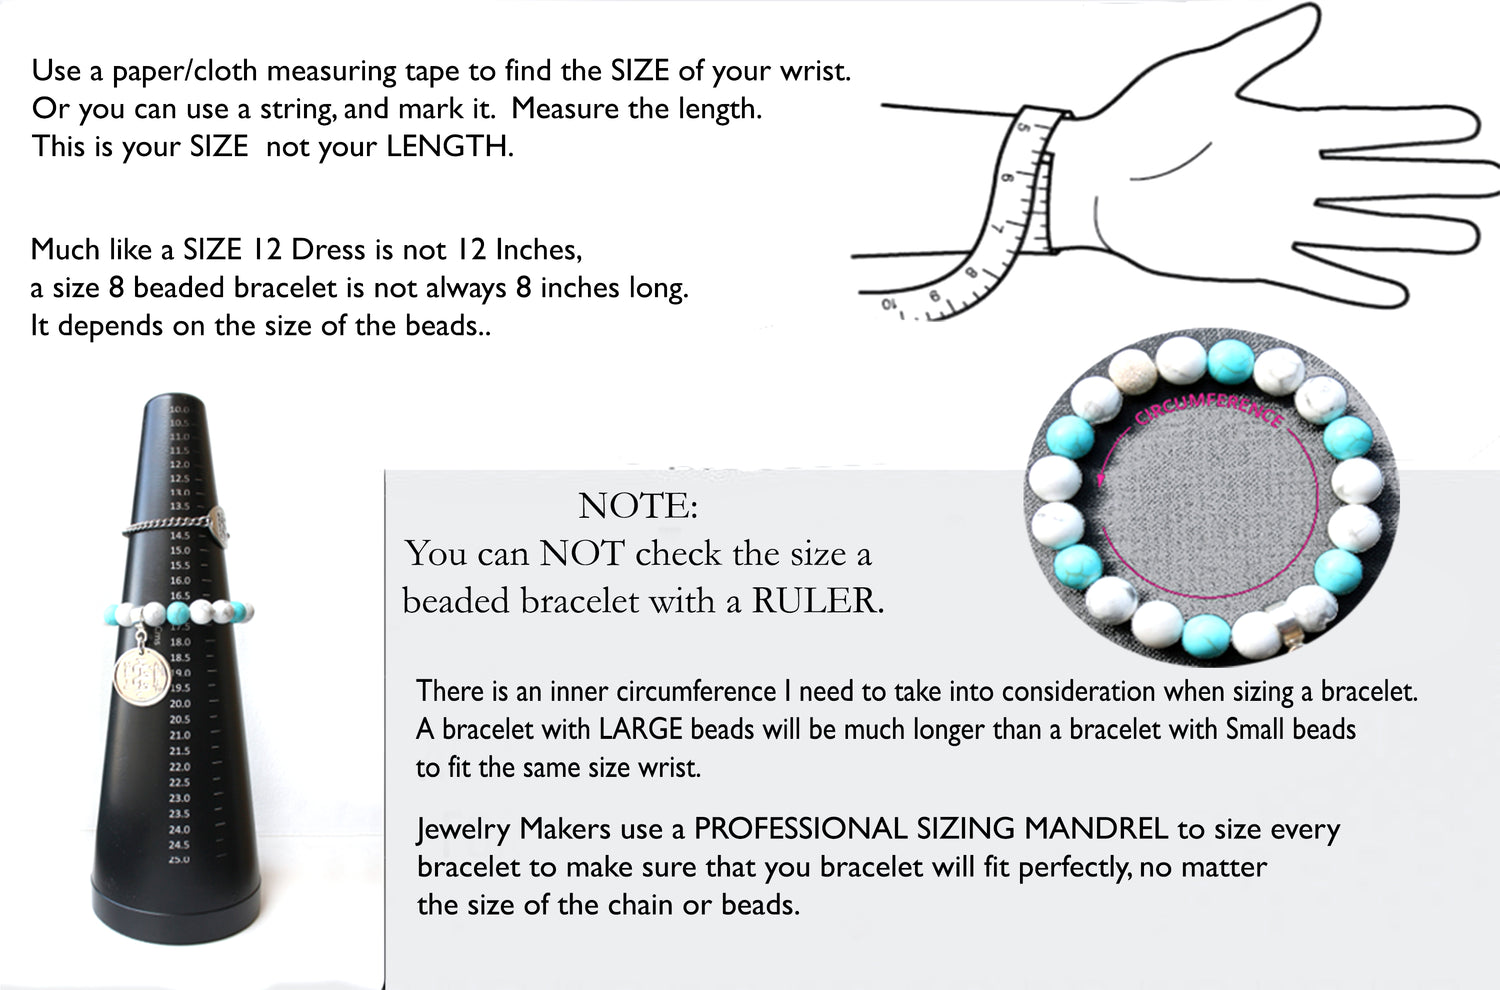 CREATIVITY Mens Carnelian Bracelet , Sacral Chakra Stone Crystals Bracelet, Jewels for Gents